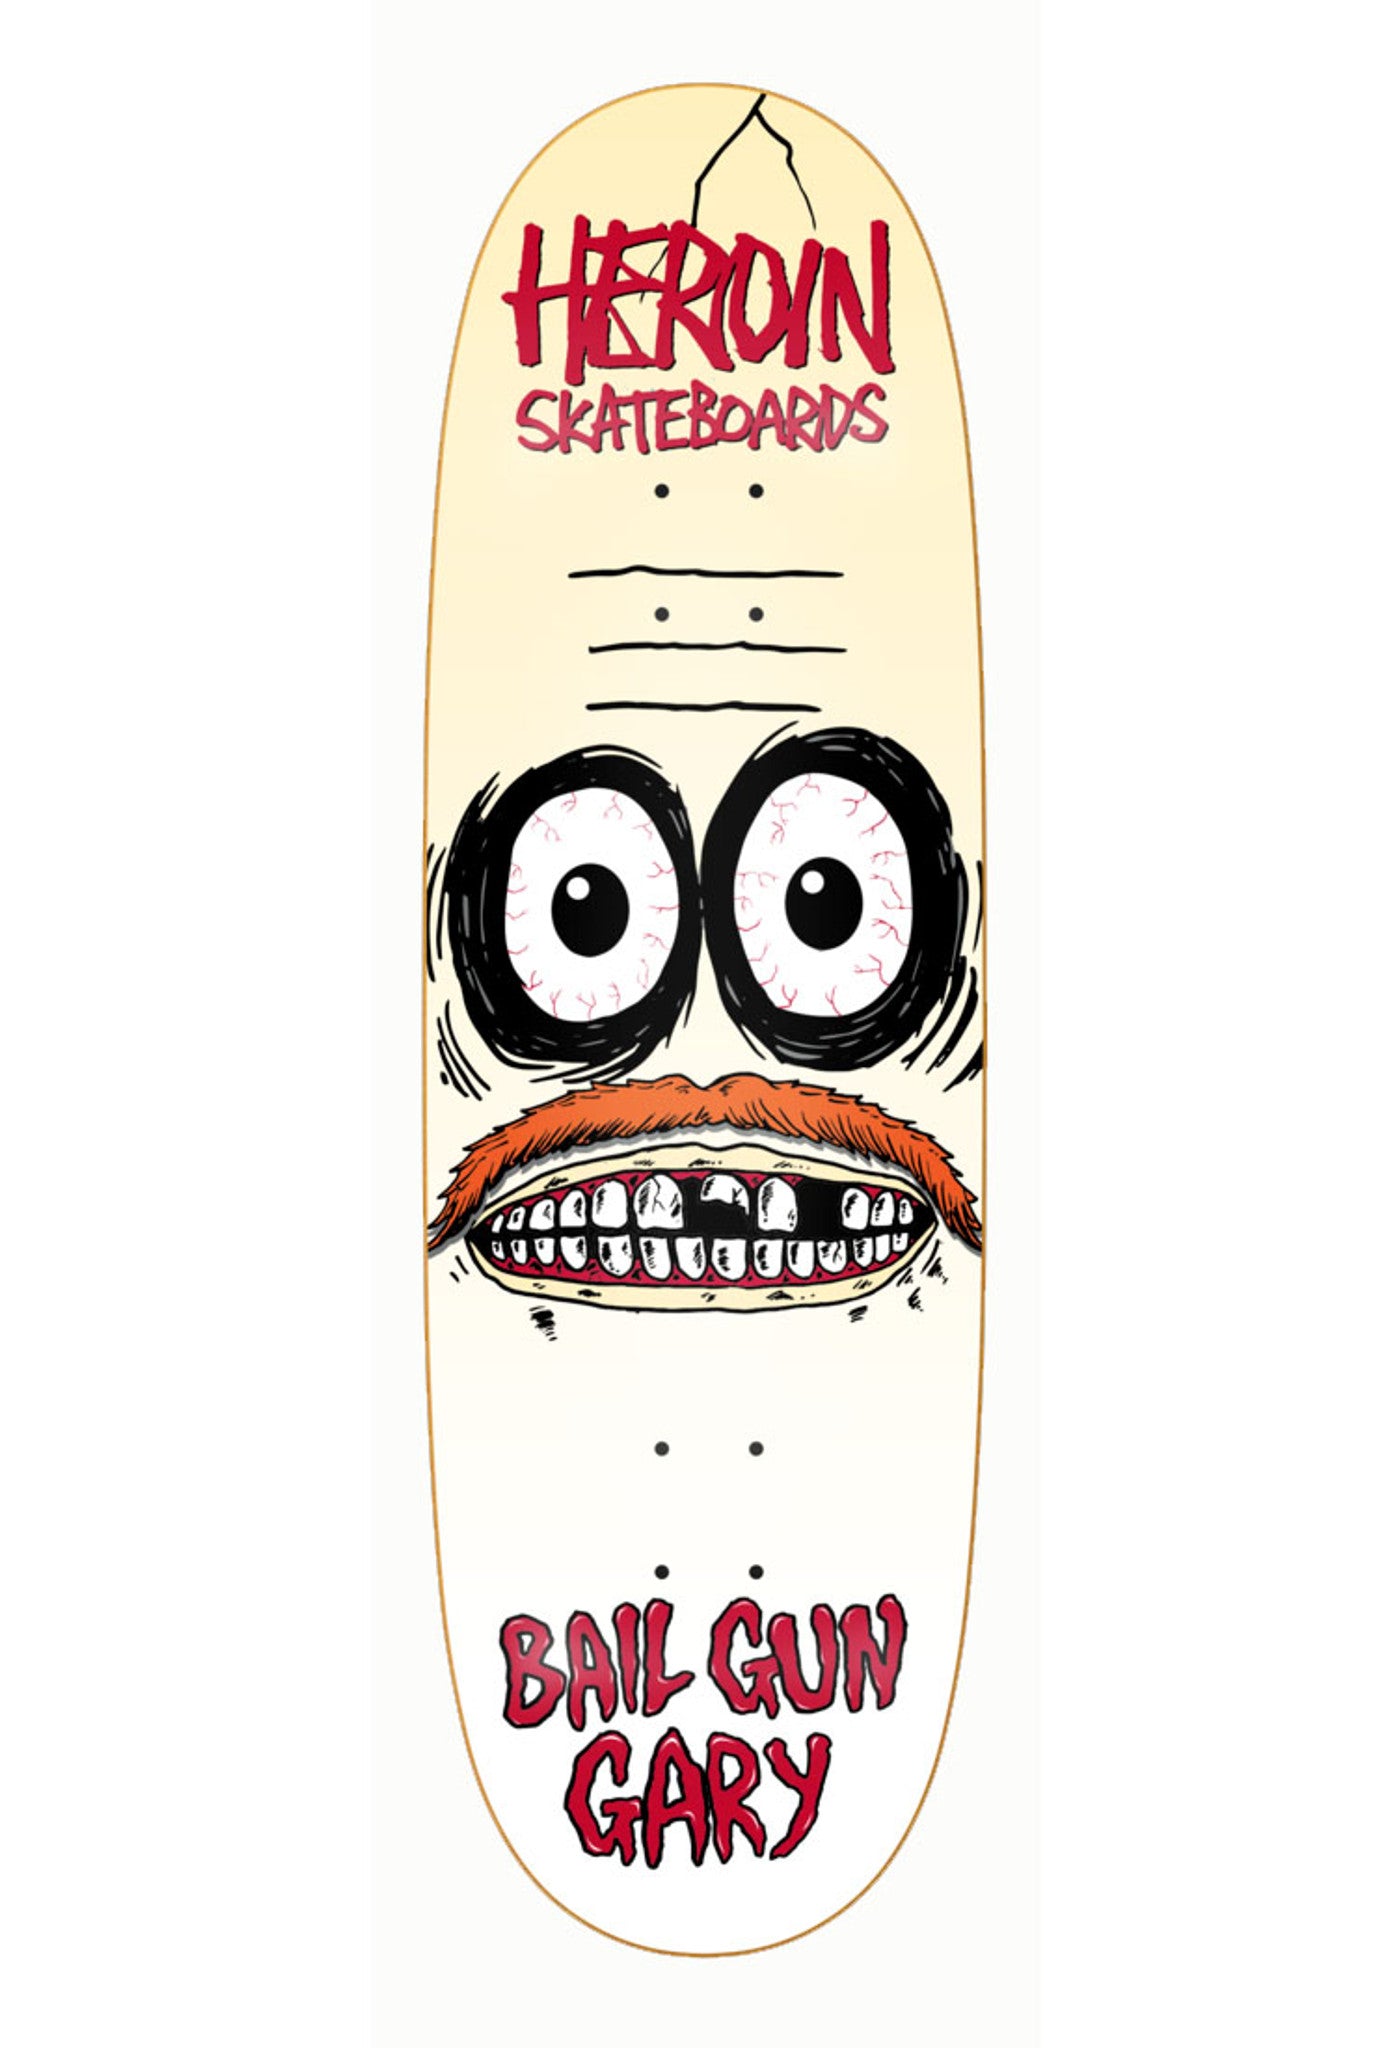 Heroin Skateboards Bail Gun Gary III 9.75" Deck